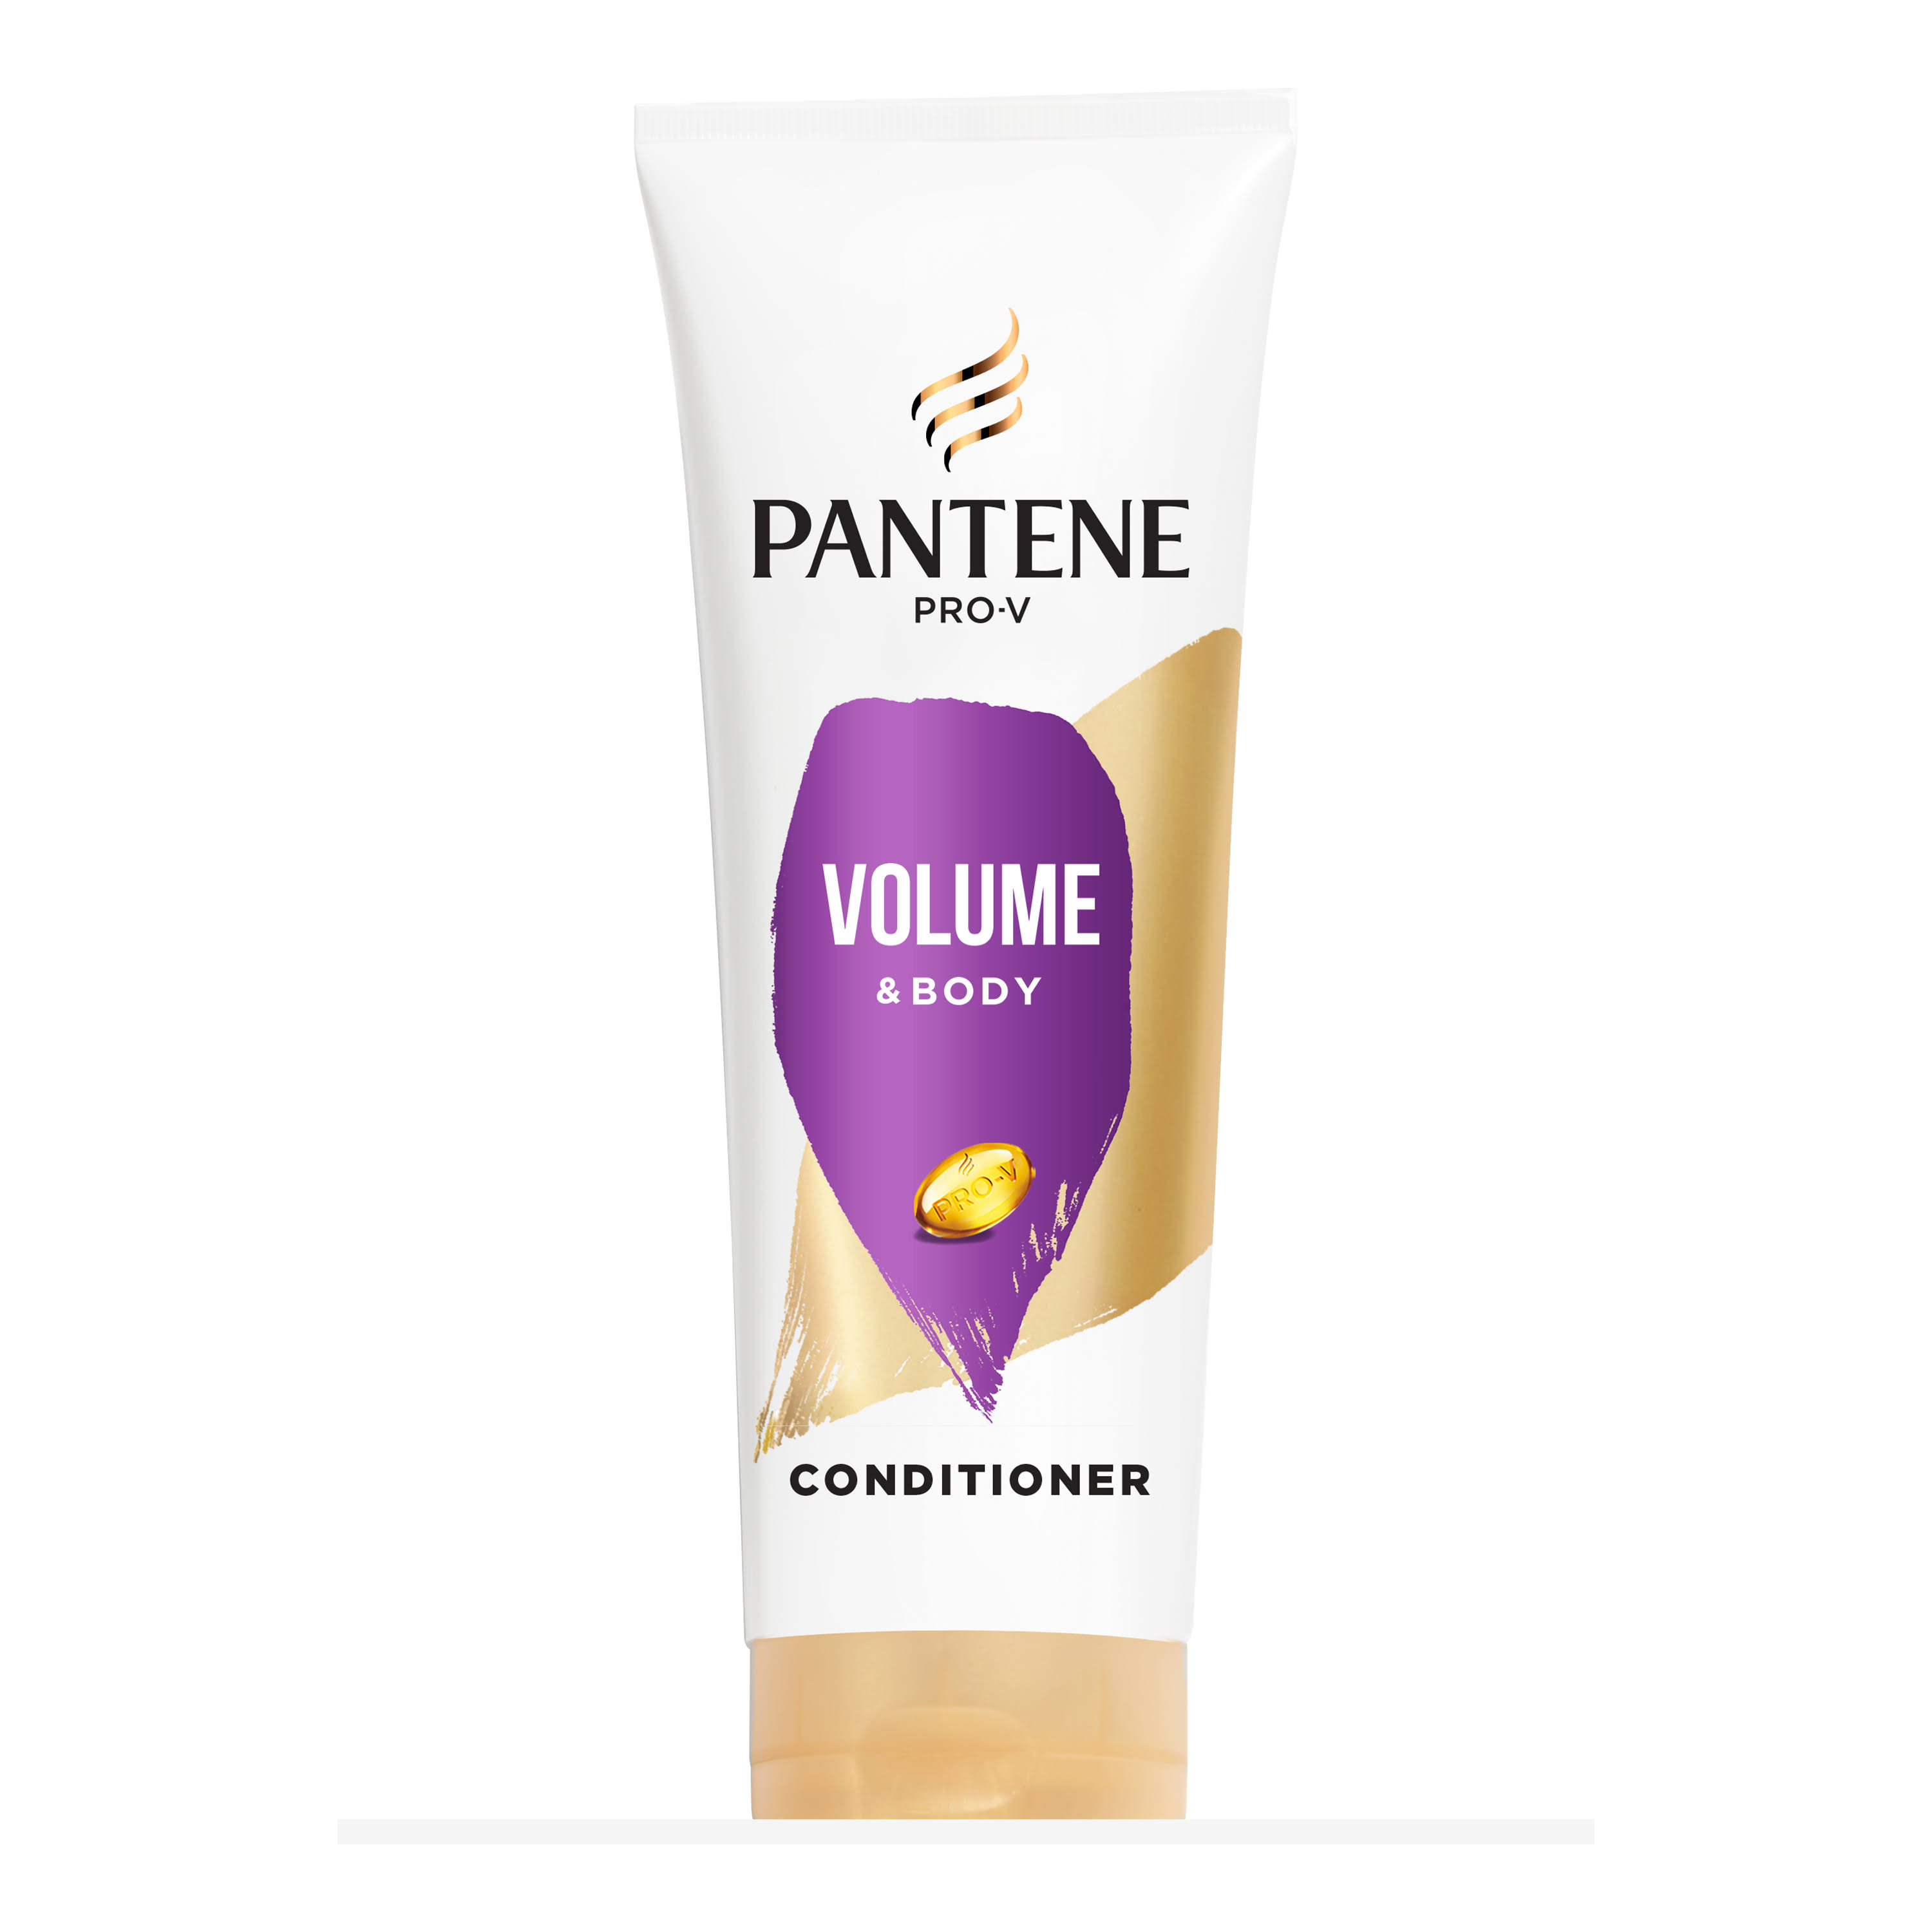 Pantene Conditioner, Volume & Body - 308 ml